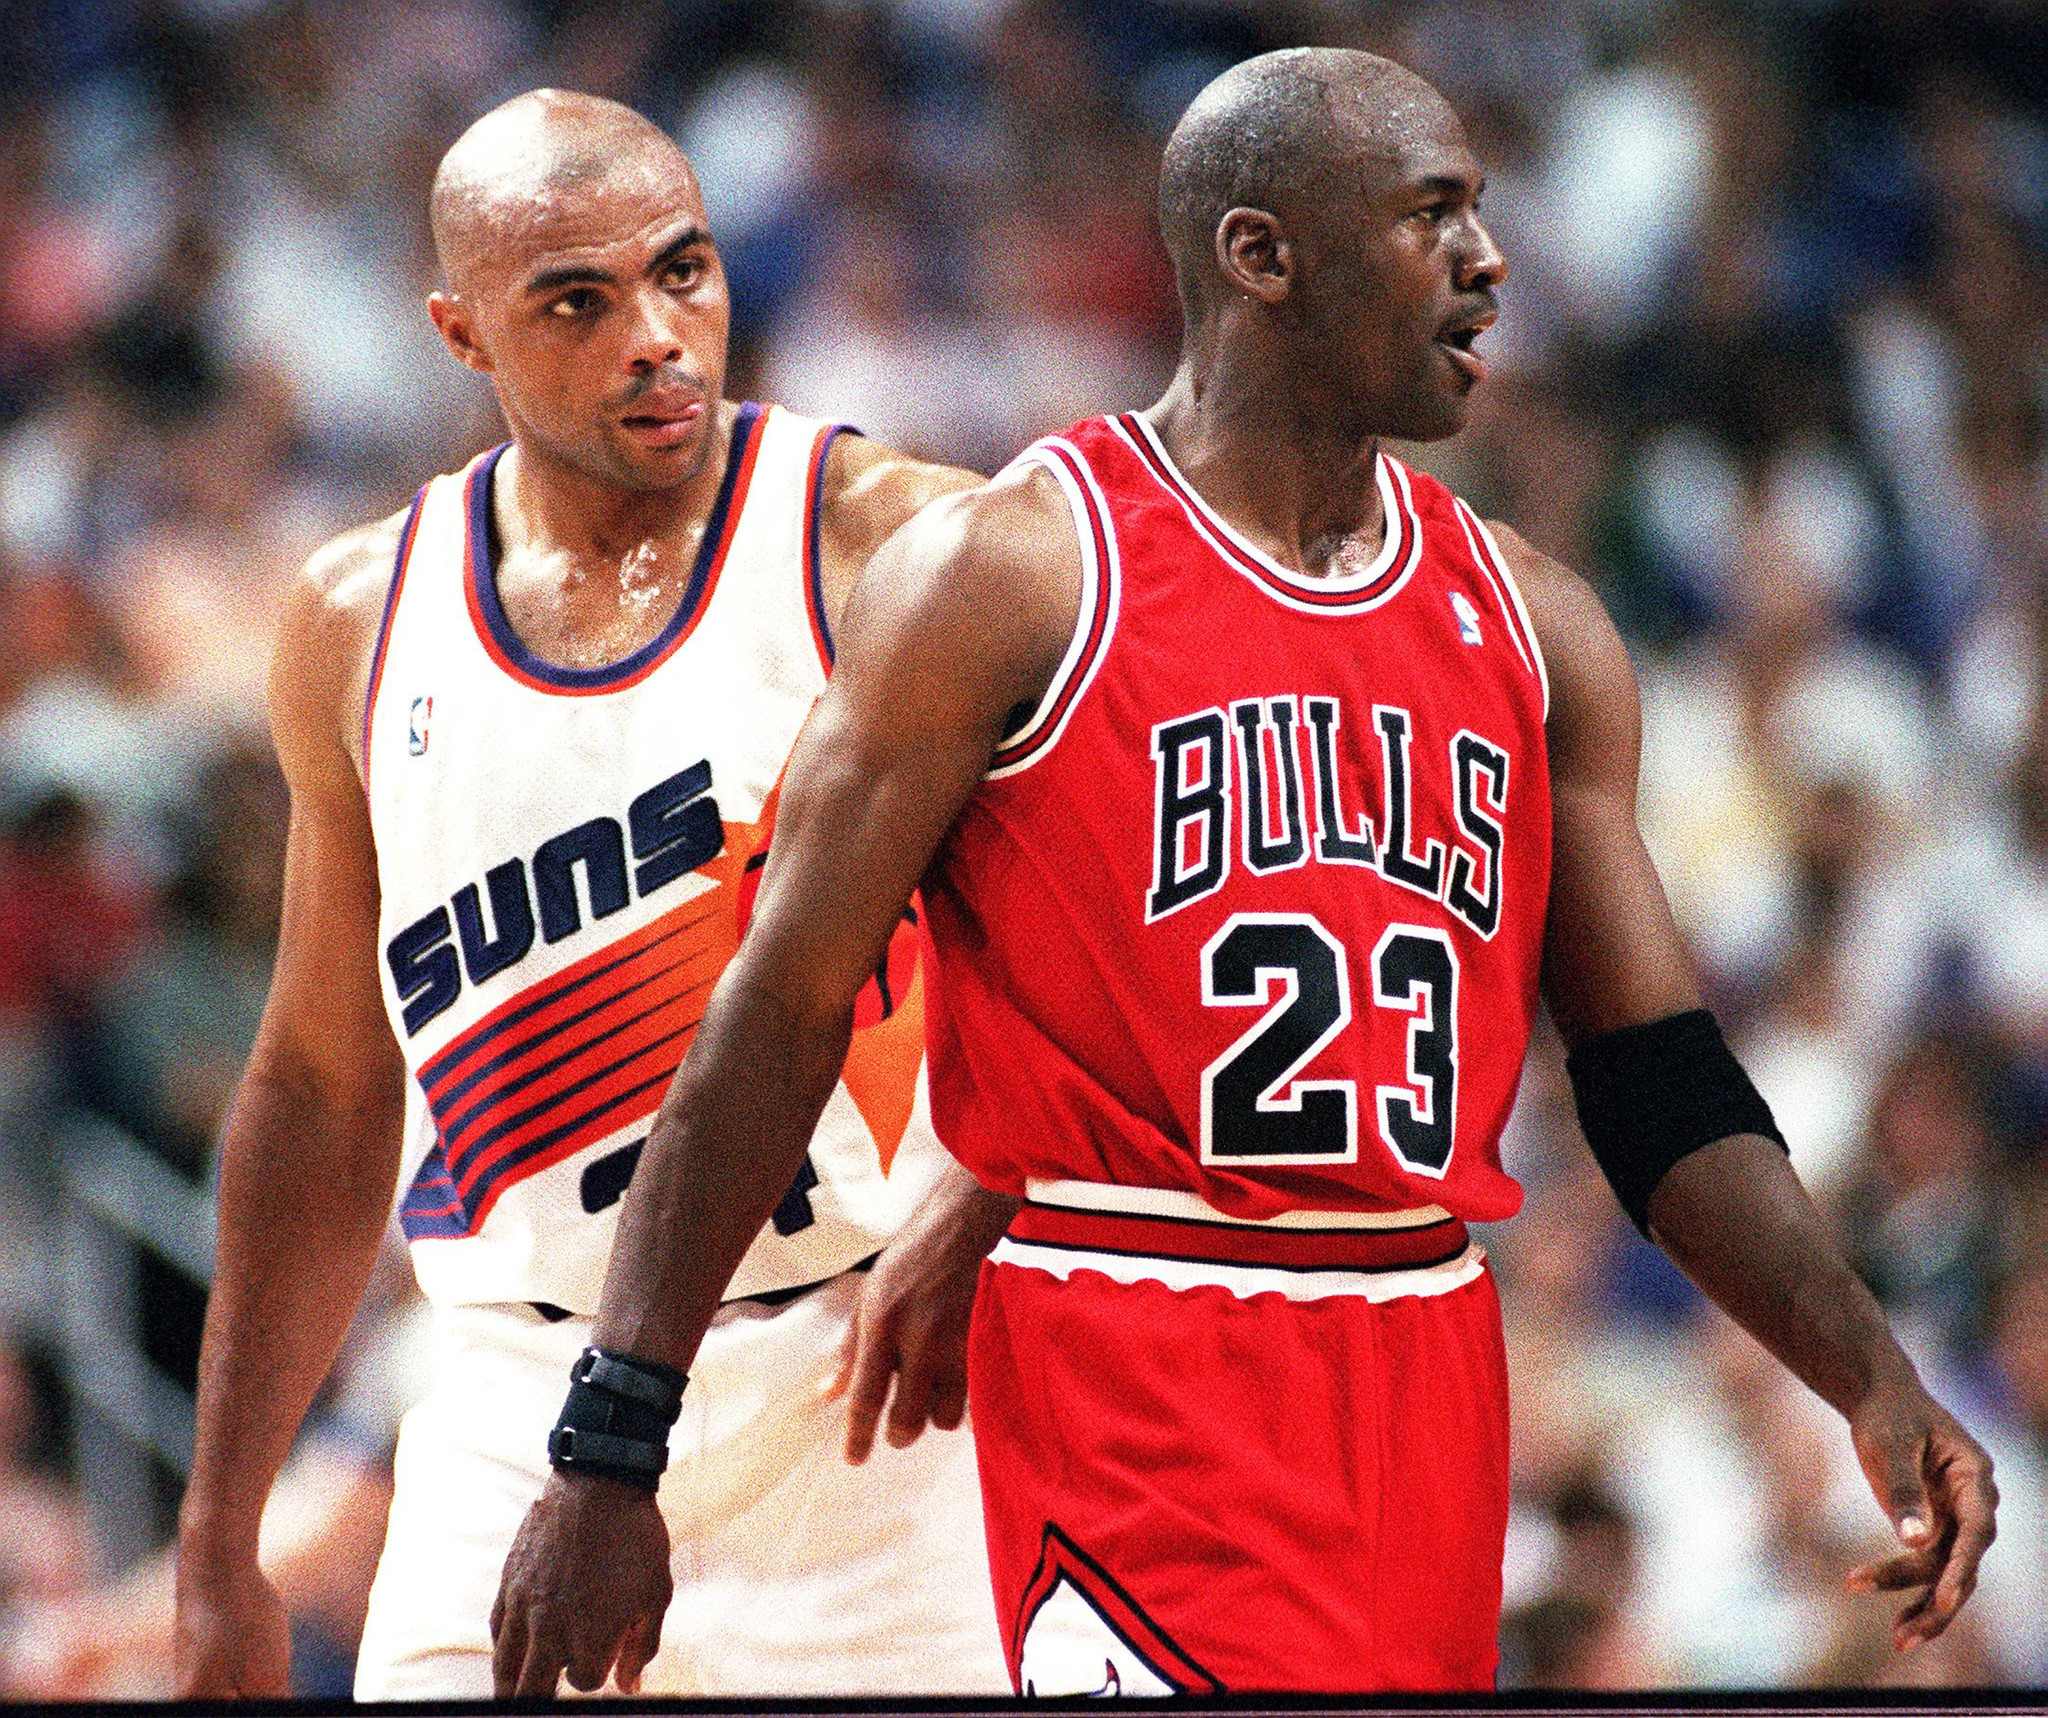 Chicago Tribune - Michael Jordan on a breakaway dunk against the